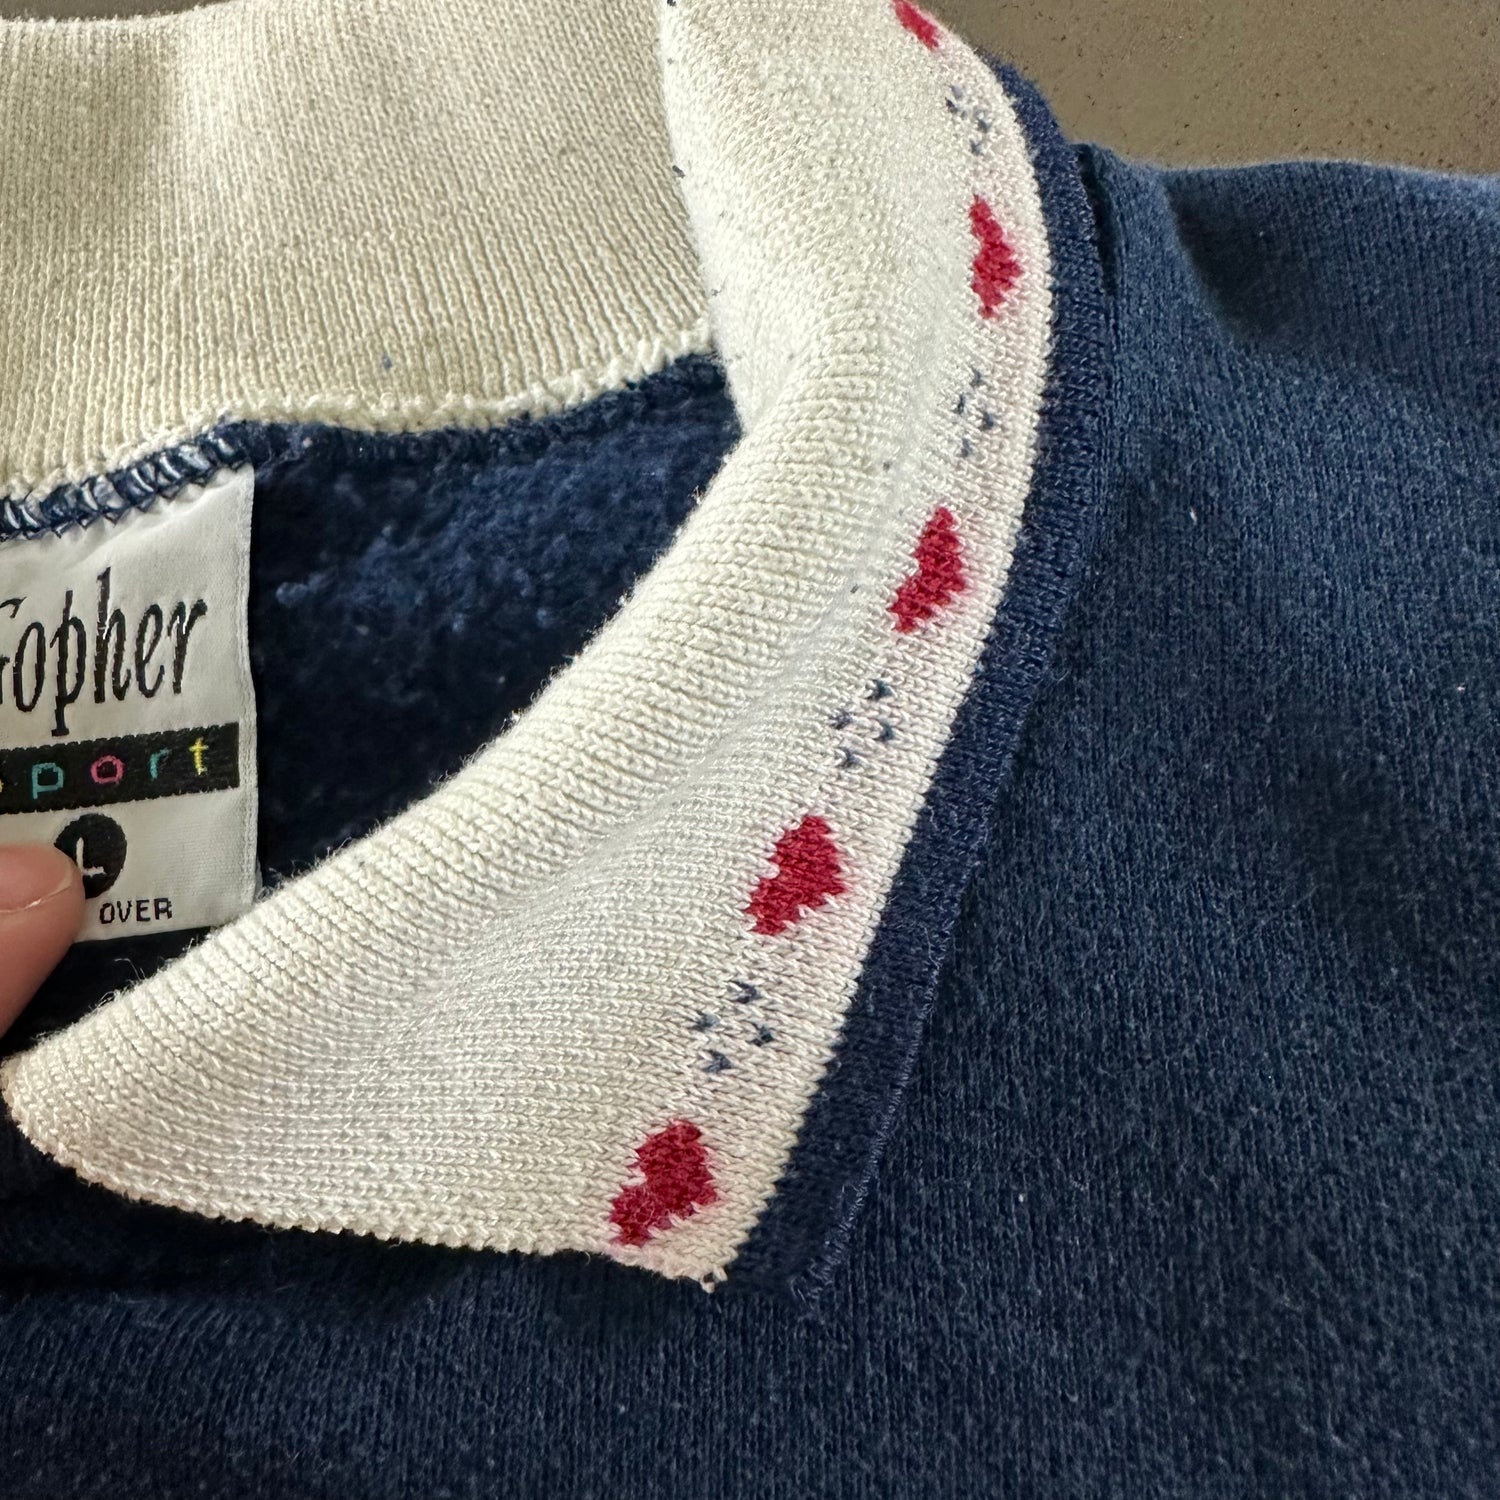 Vintage 1990s Heart Sweatshirt size Large